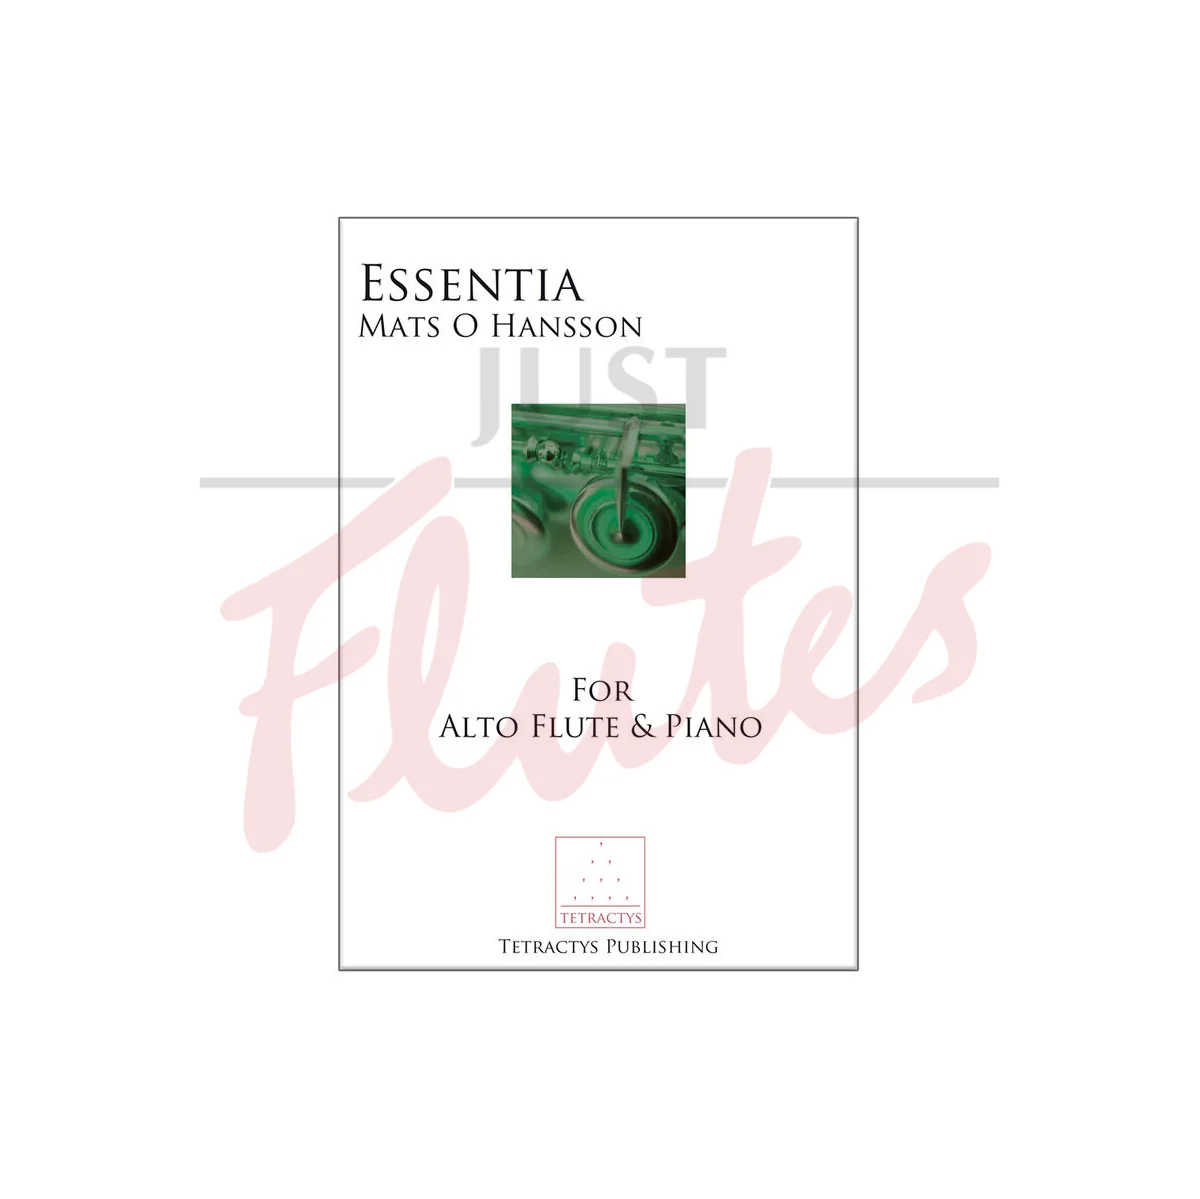 Essentia for Alto Flute and Piano